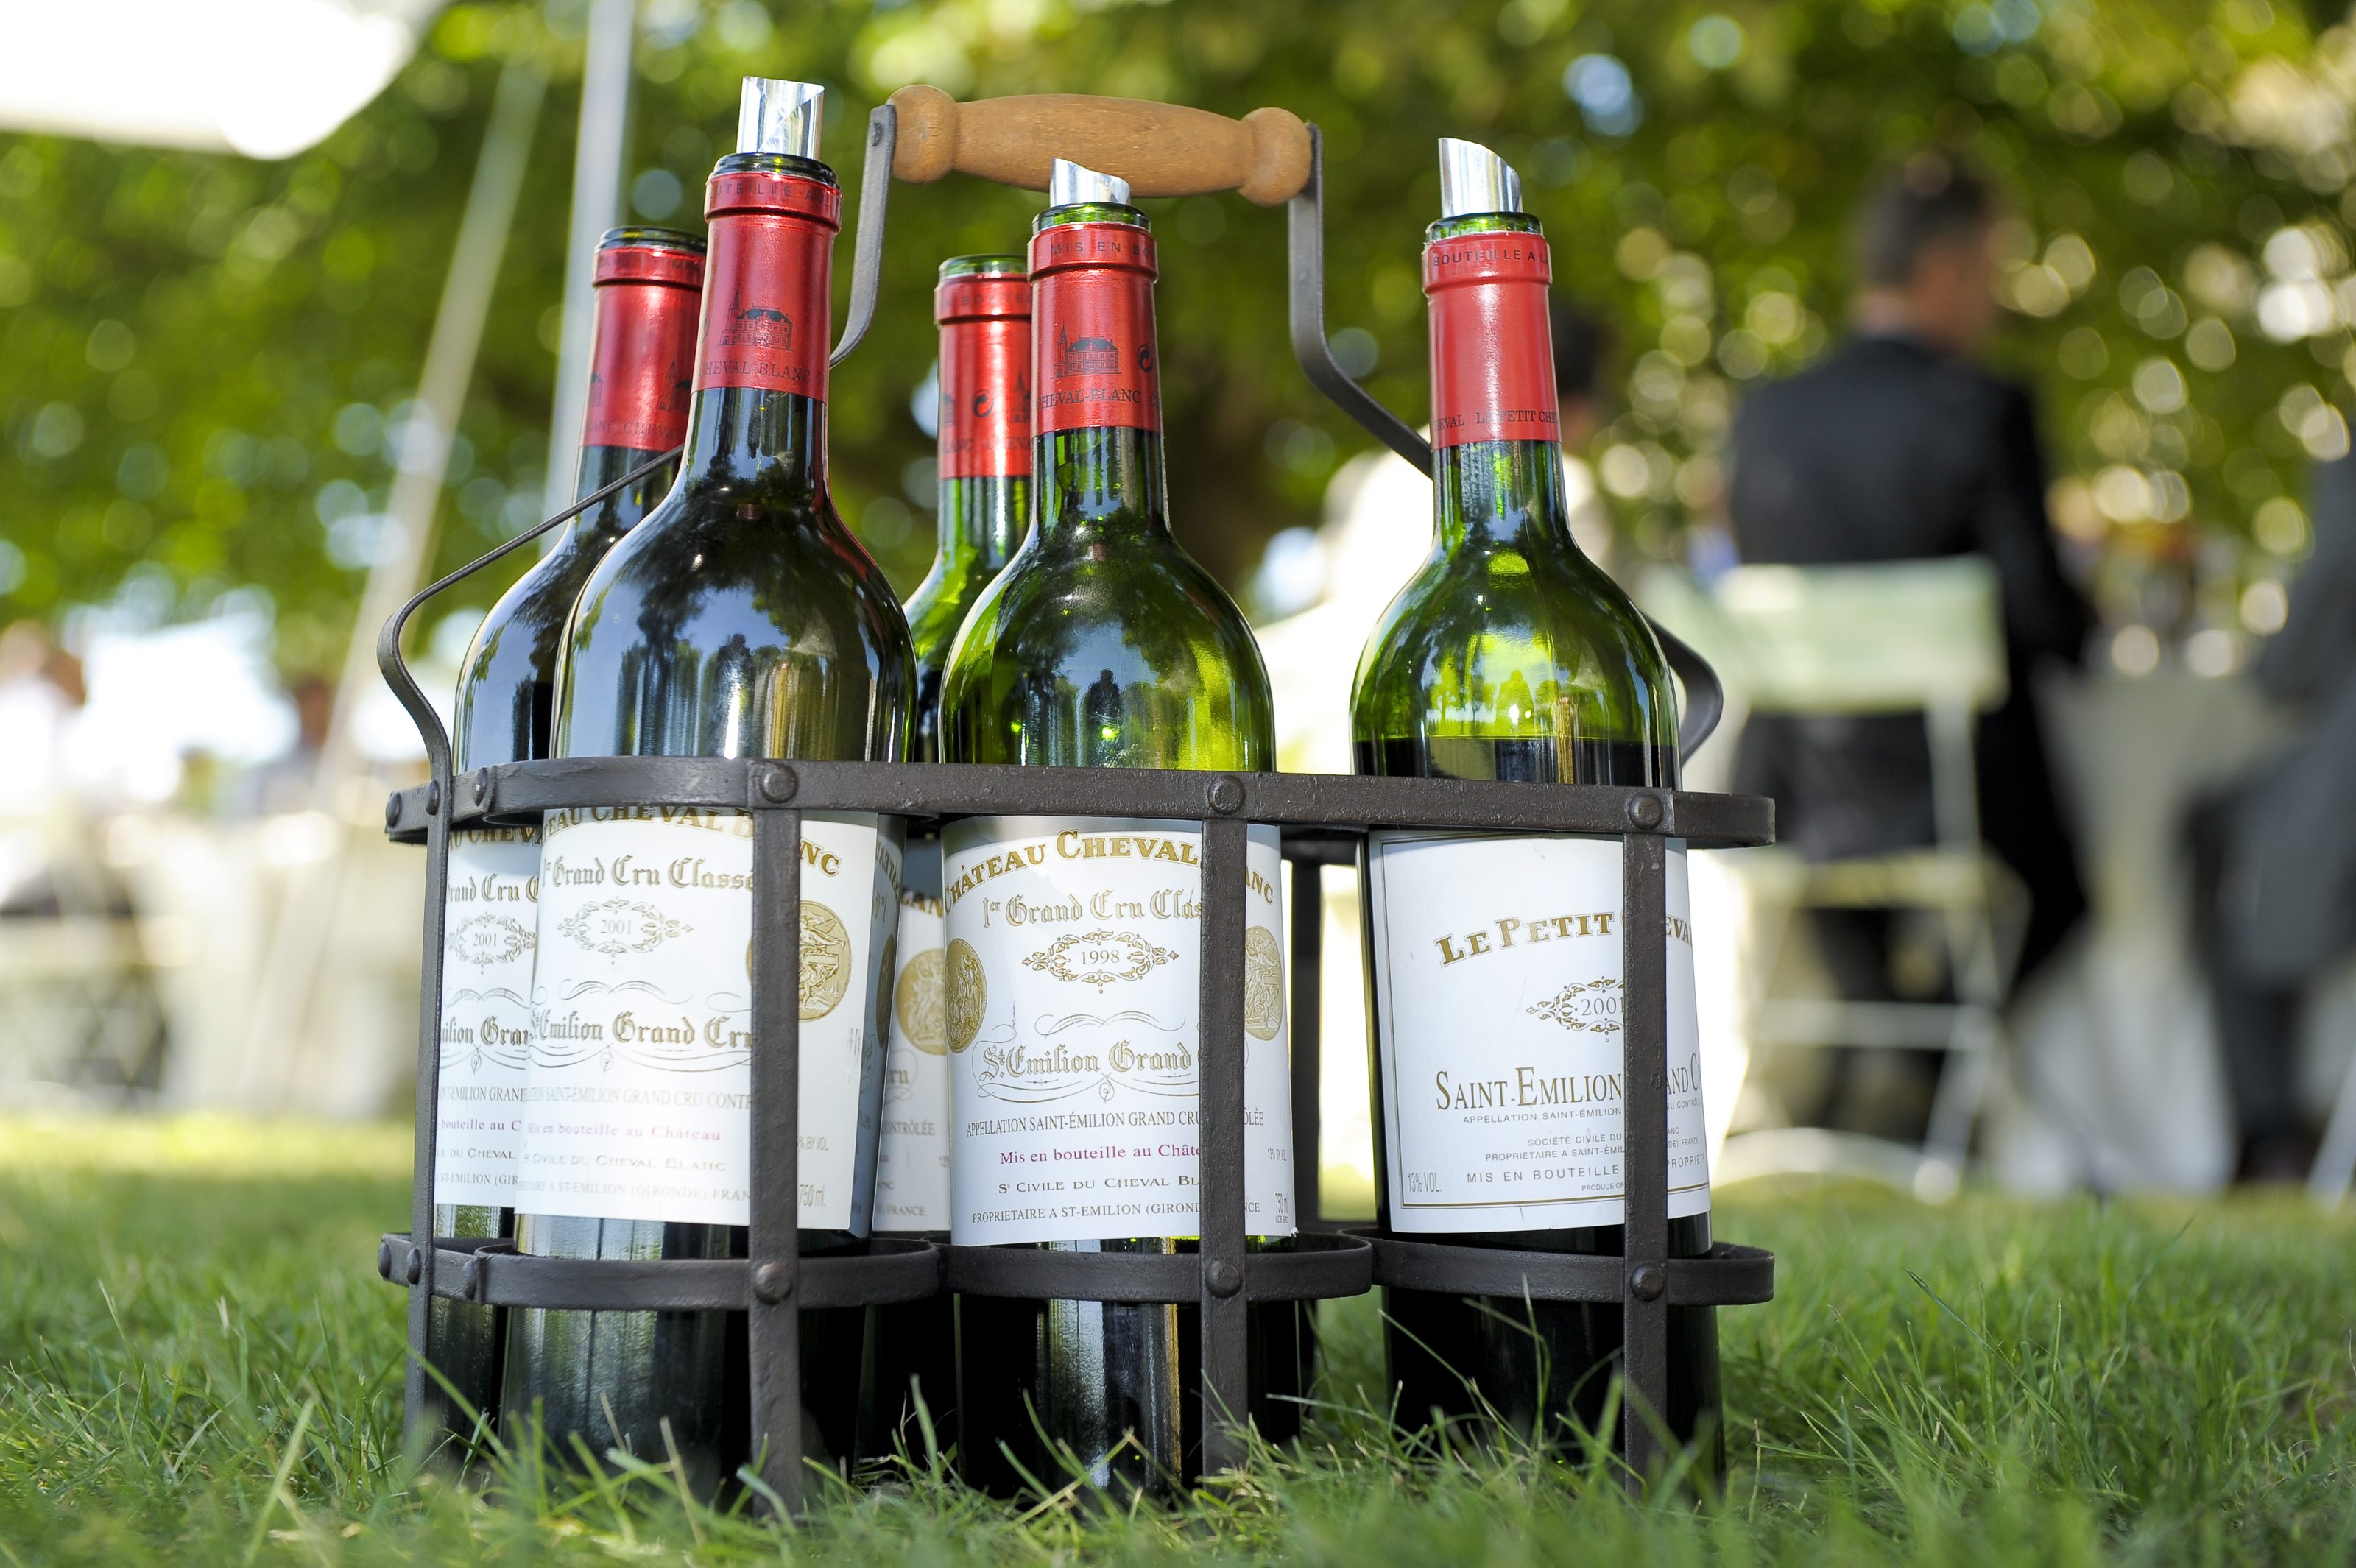 2010 Cheval Blanc Red Bordeaux Blend